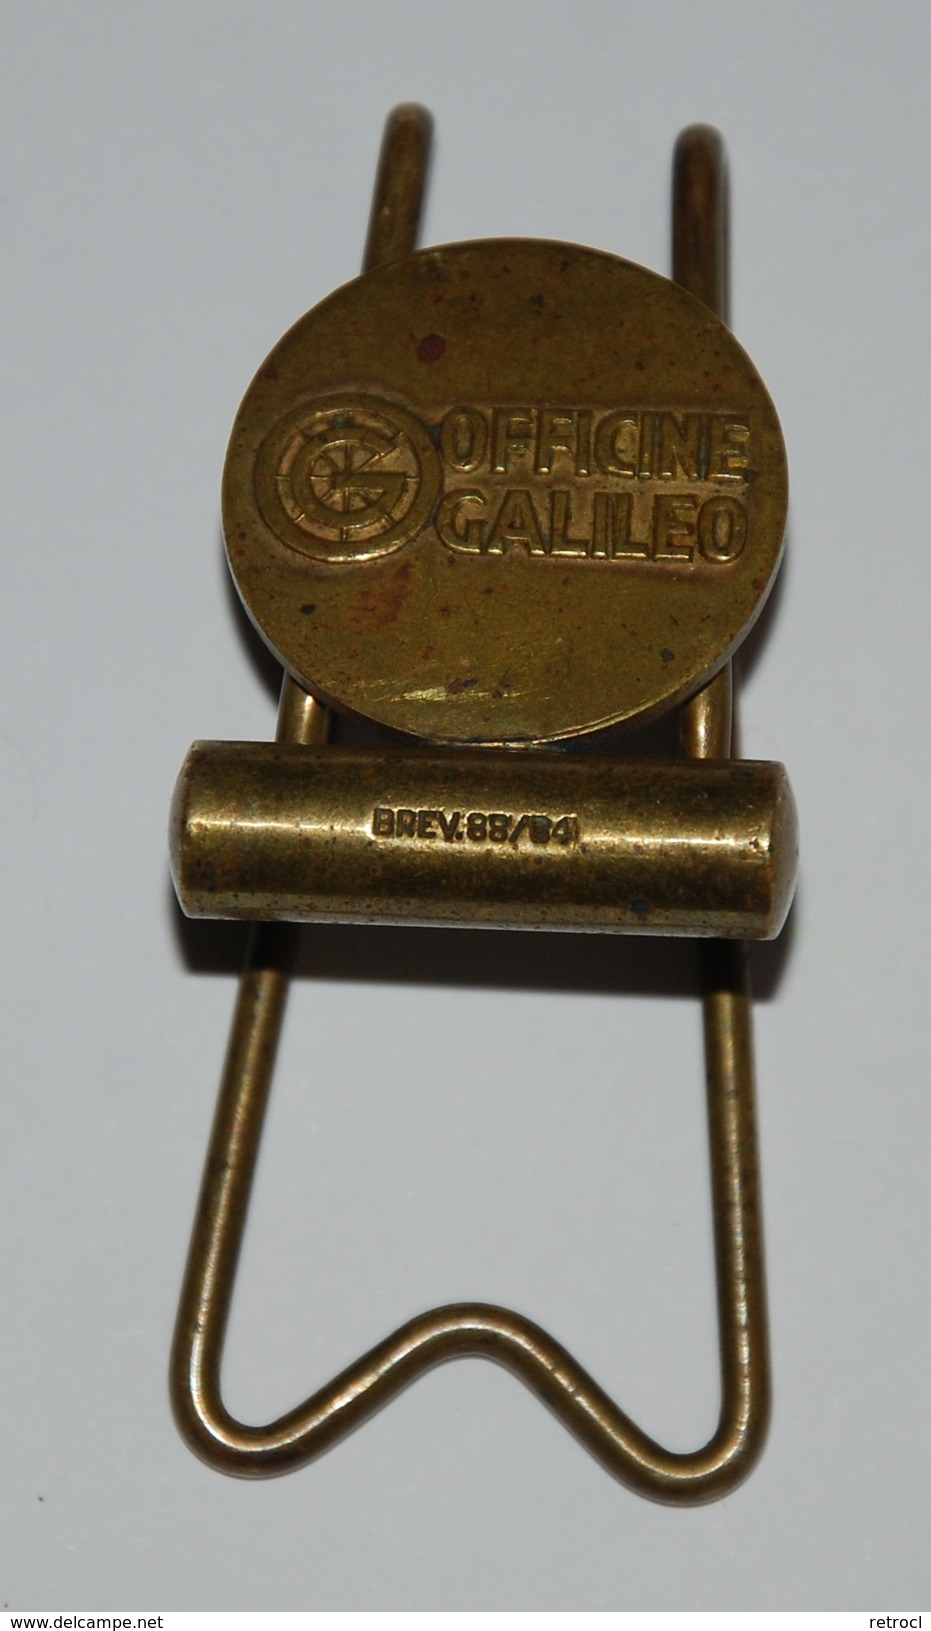 1934 - Oficcine Galileo - Paper Clip - Paper-weights